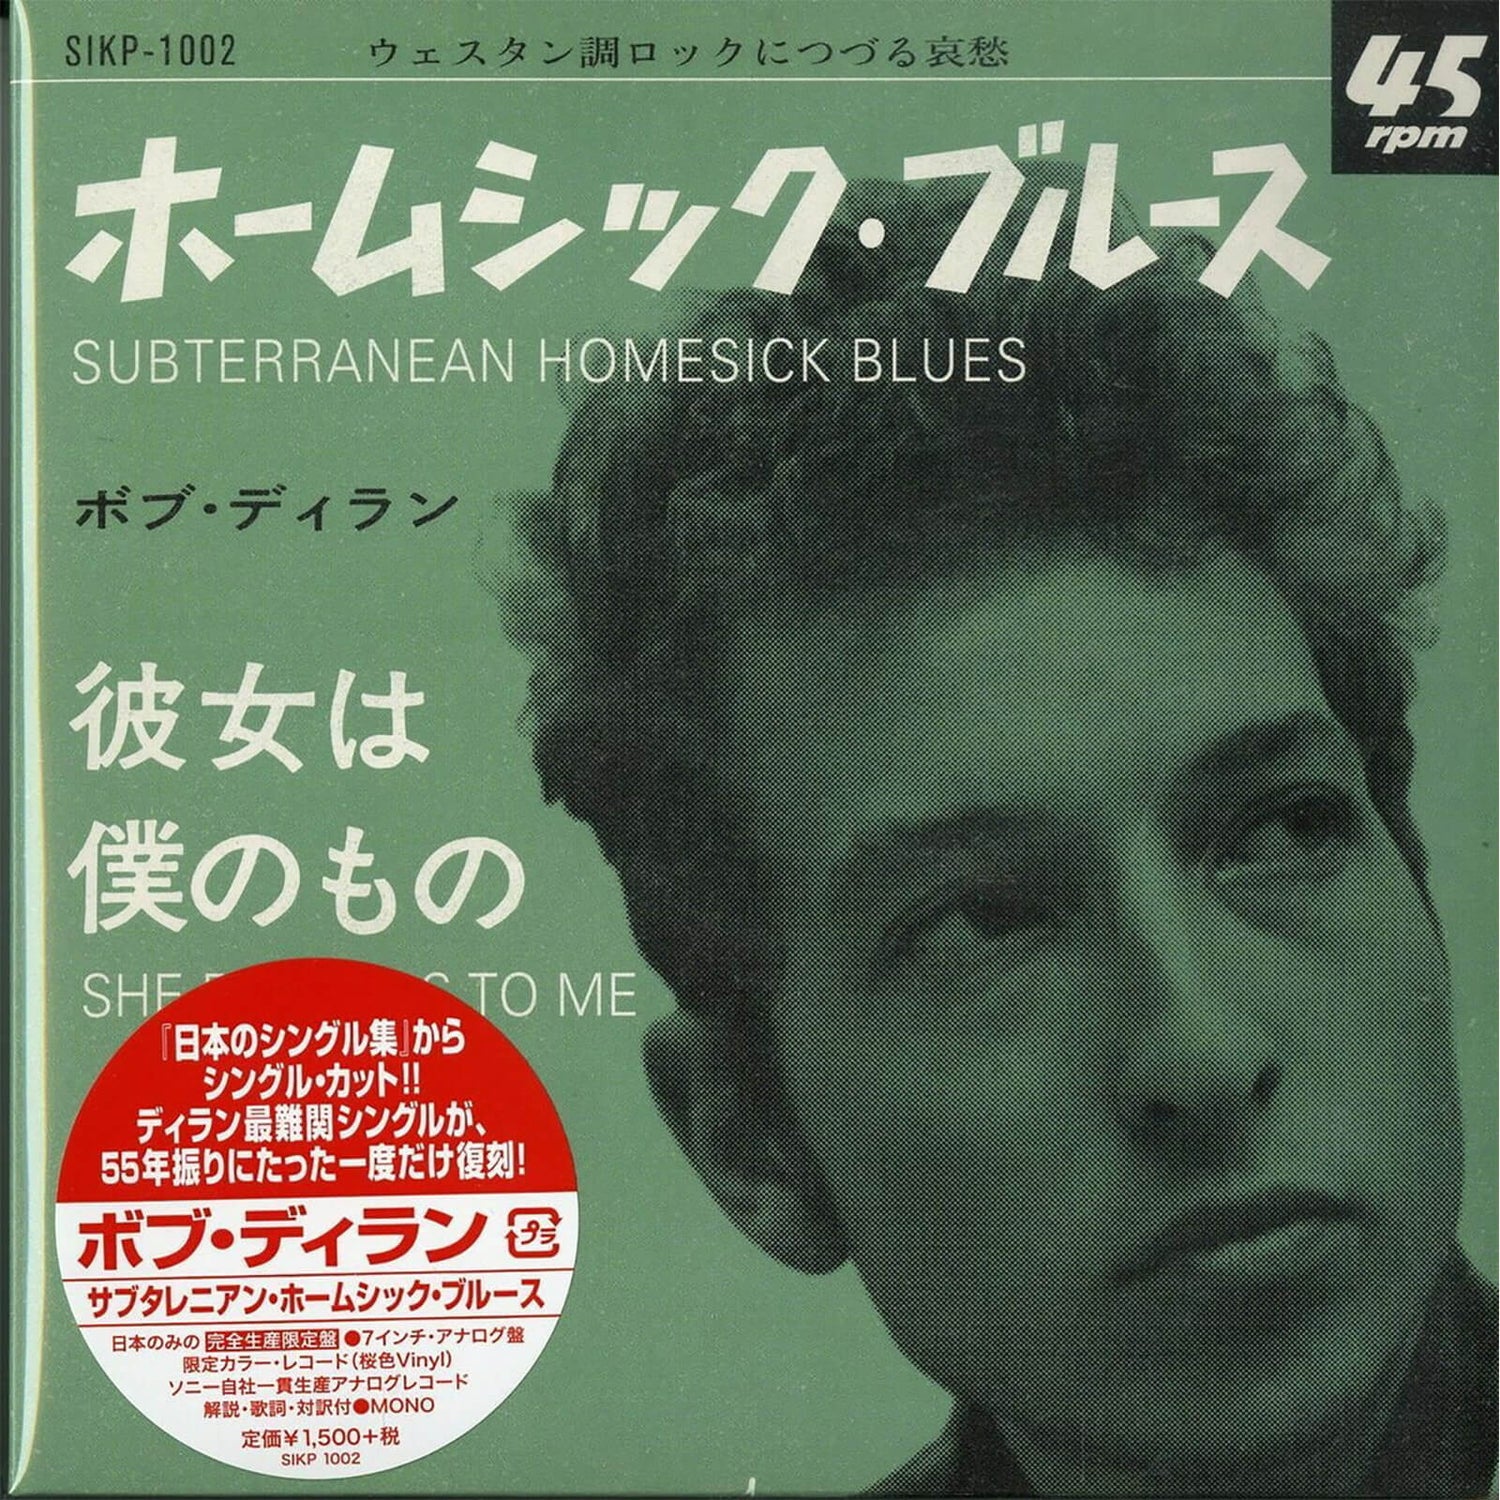 Bob Dylan - Subterranean Homesick Blues / She Belongs To Me 18 cm Japanische Ausgabe